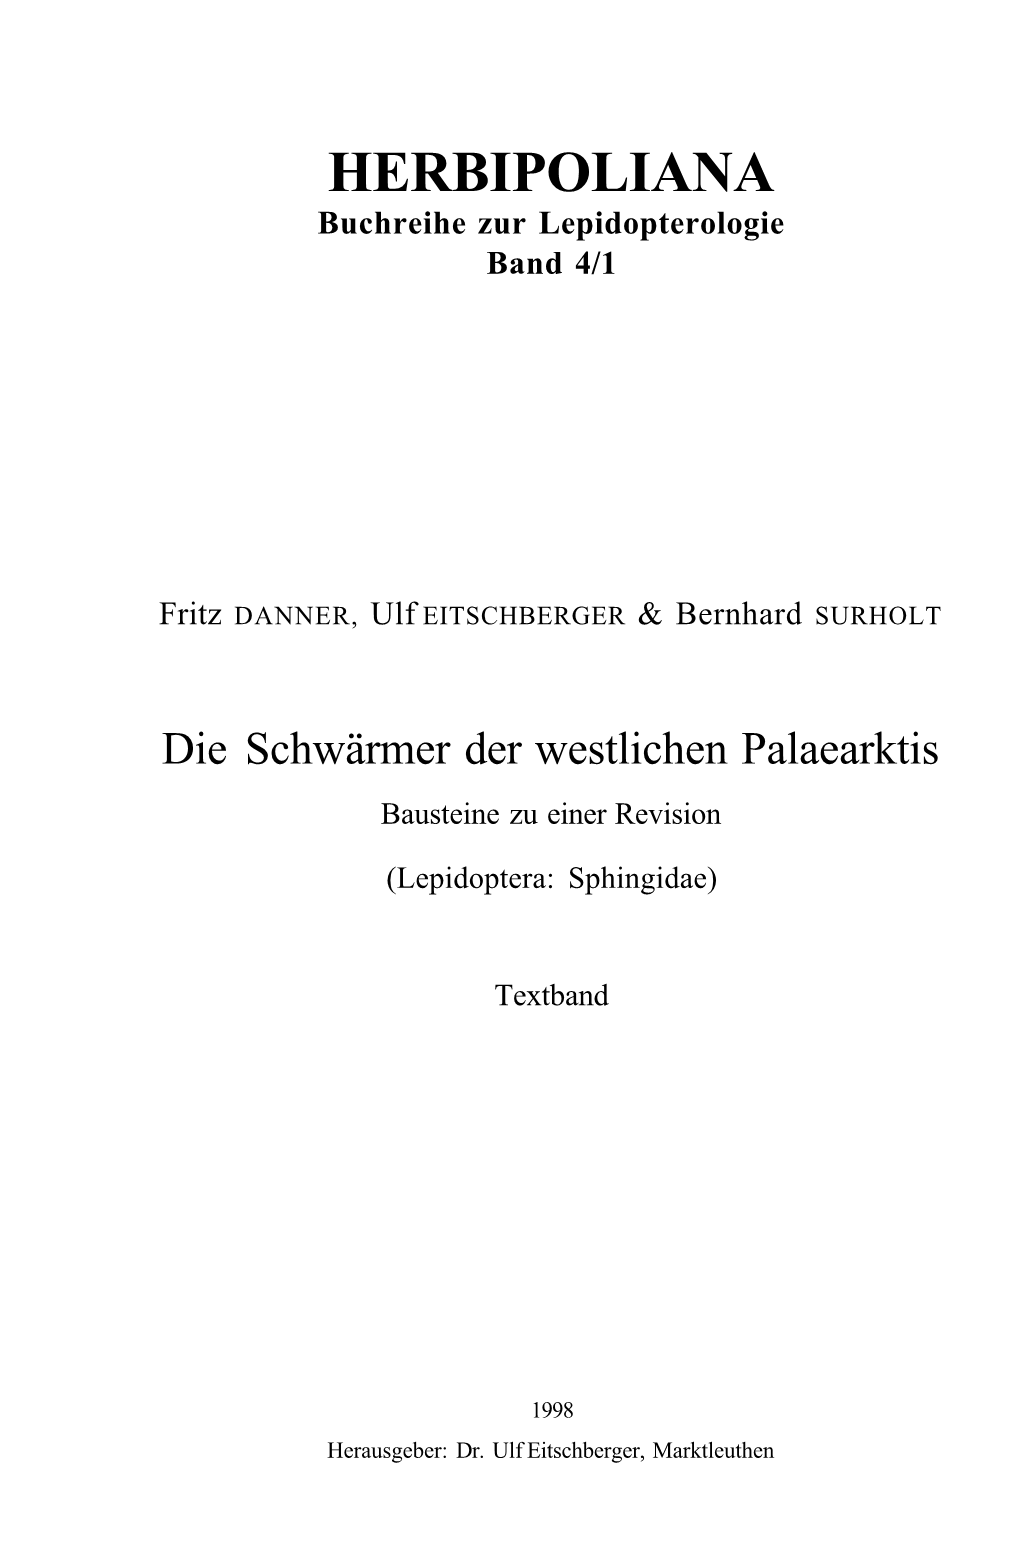 HERBIPOLIANA Buchreihe Zur Lepidopterologie Band 4/1